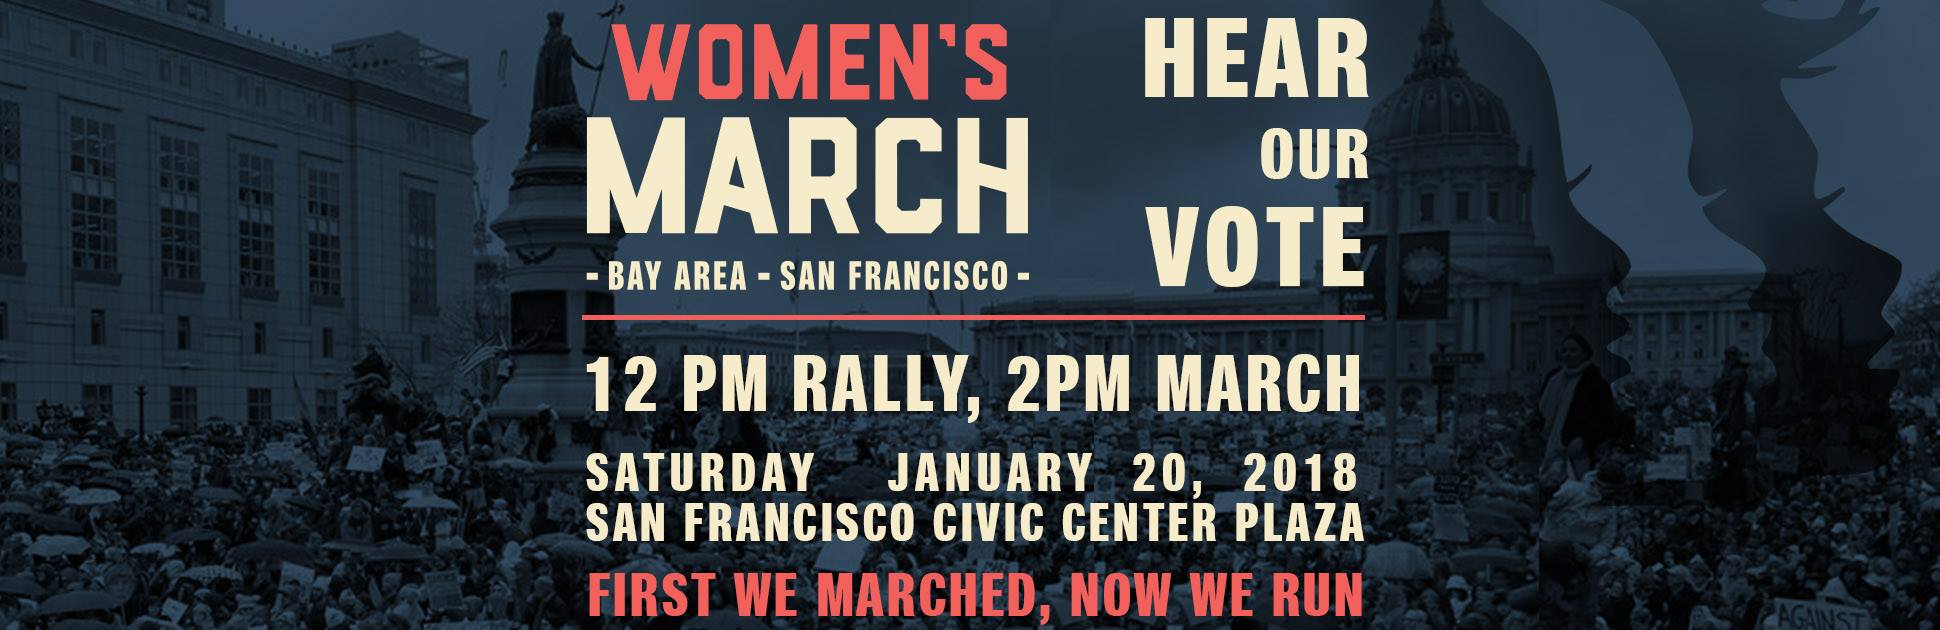 Women's March San Francisco #HearOurVote